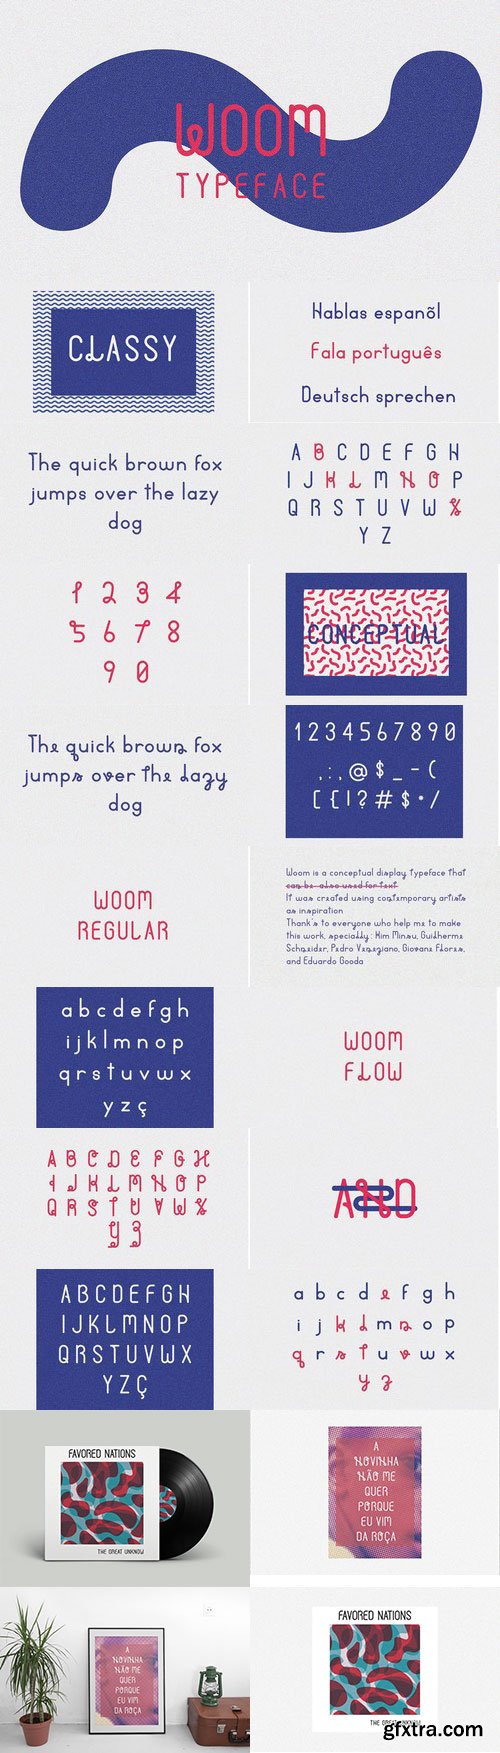 WOOM Typeface